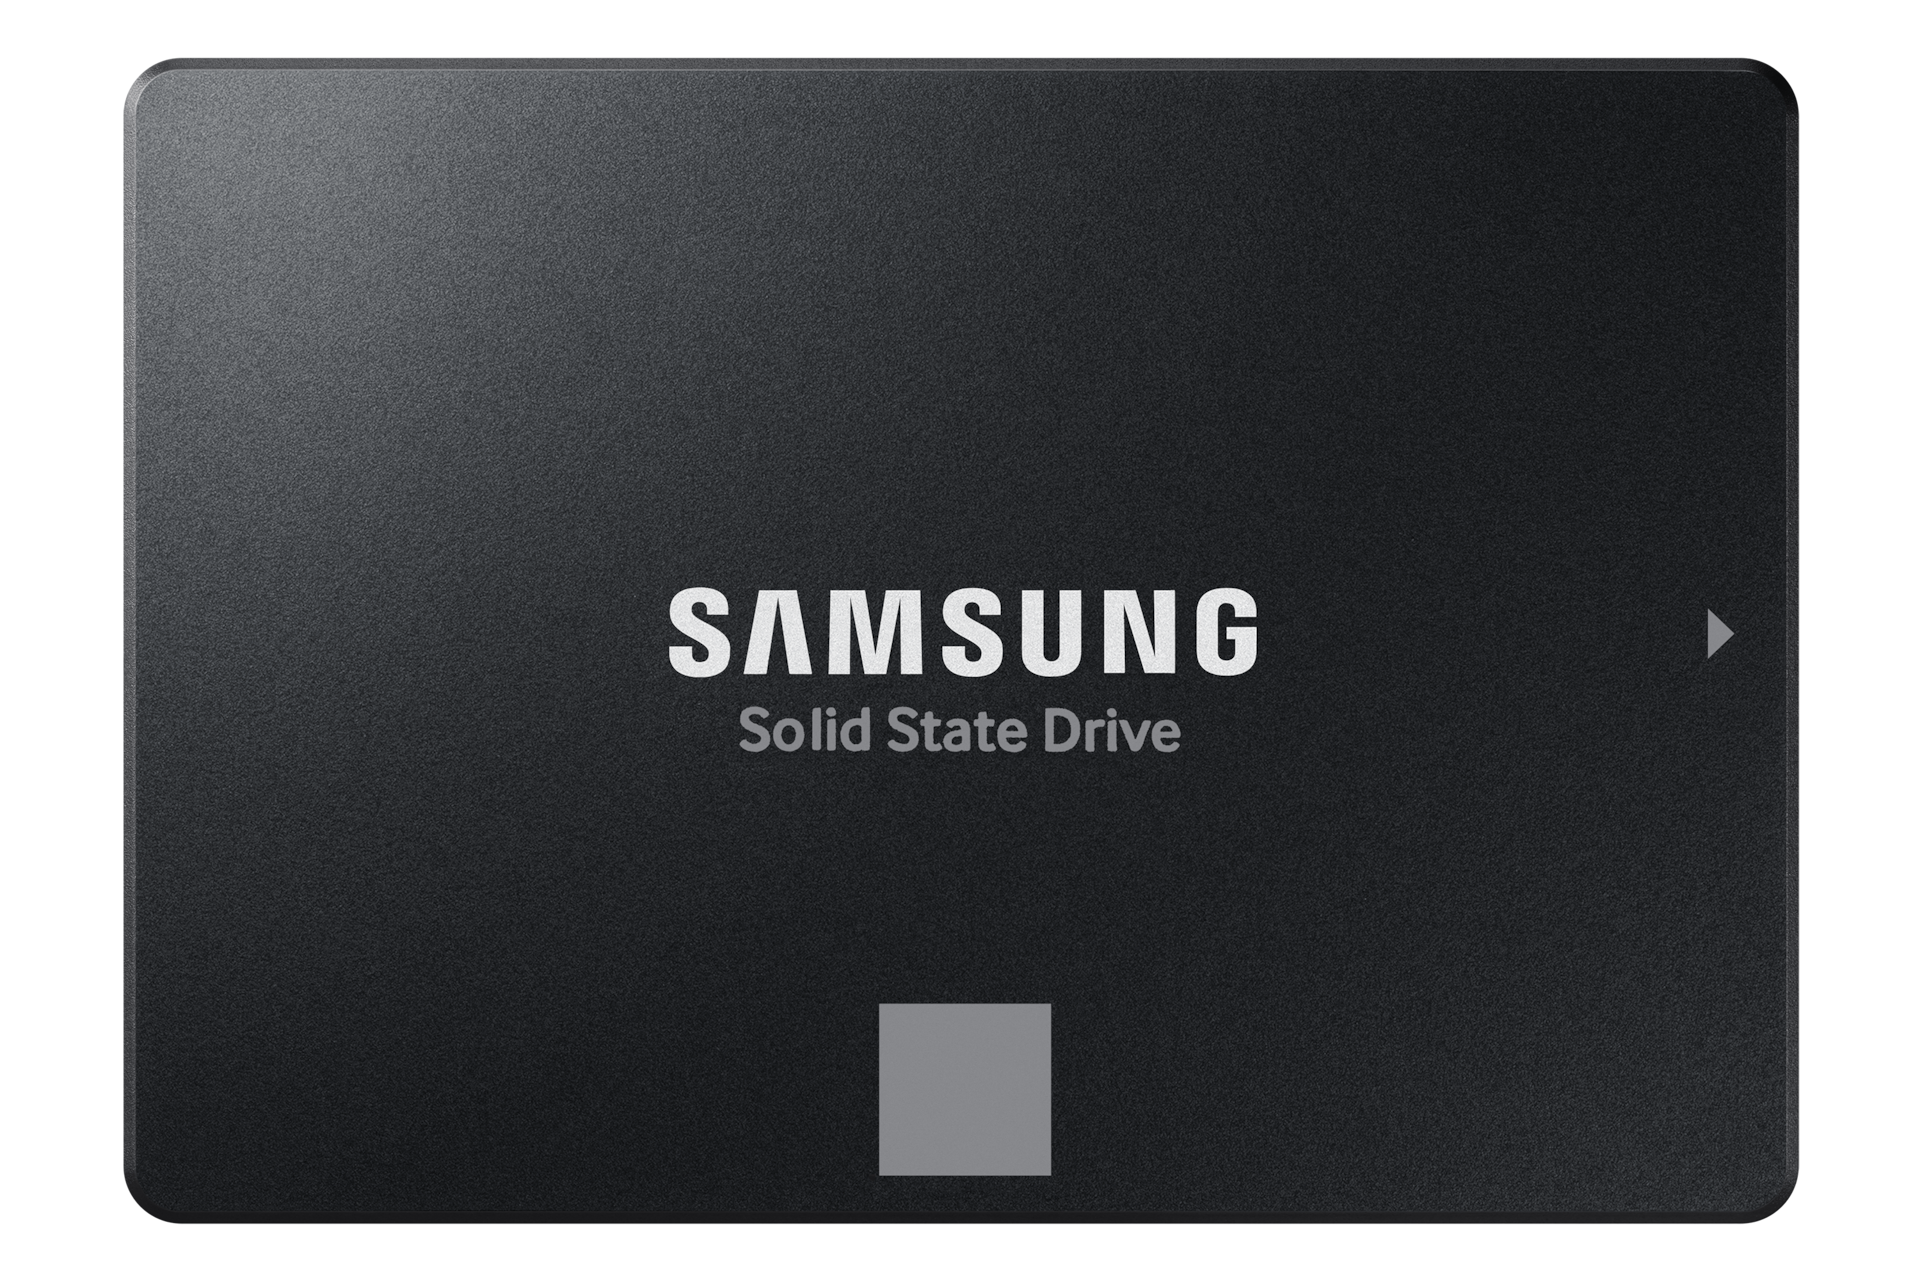 Samsung SSD 870 EVO SATA III 250GB - Black, Black